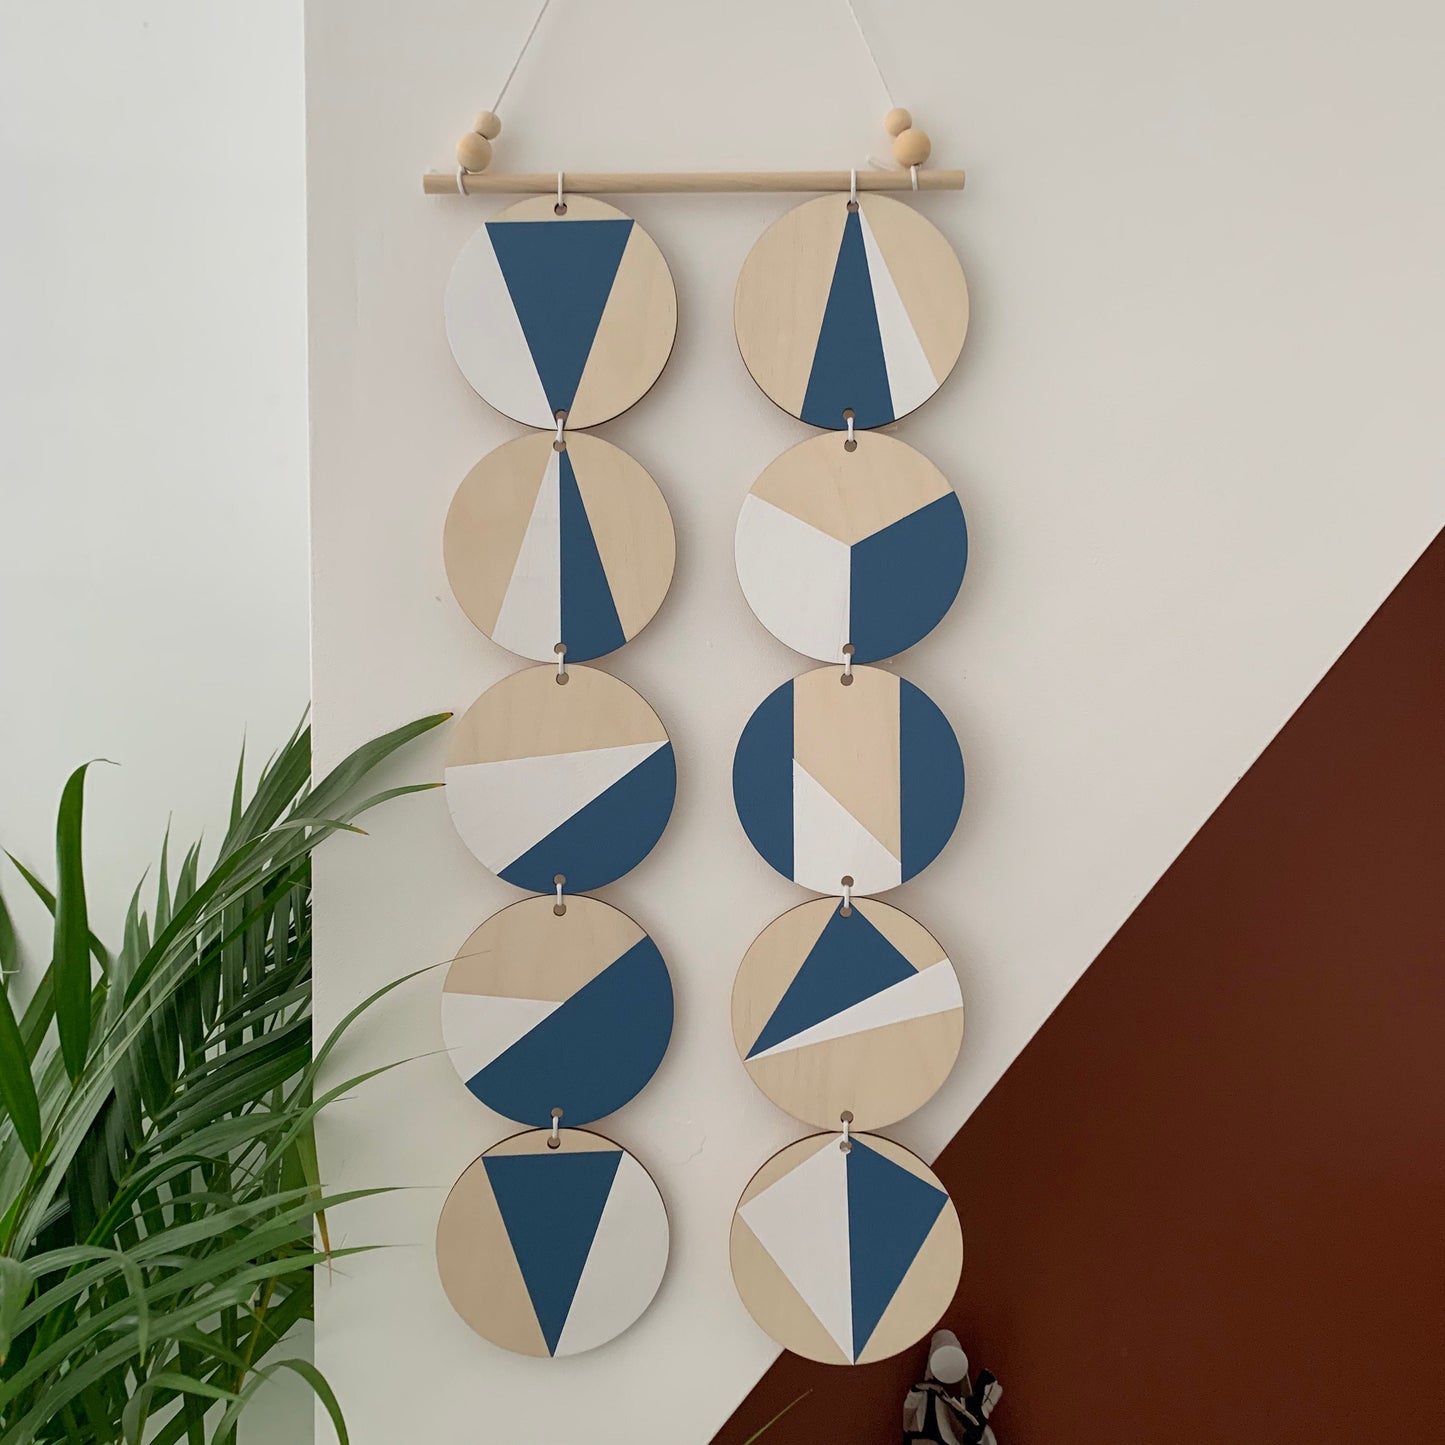 Blue Wall hanging - Modern Geometric Wall Art - Scandi Hygge Boho - Wall Hanging - wooden Wall hanging - Blue and White Decor